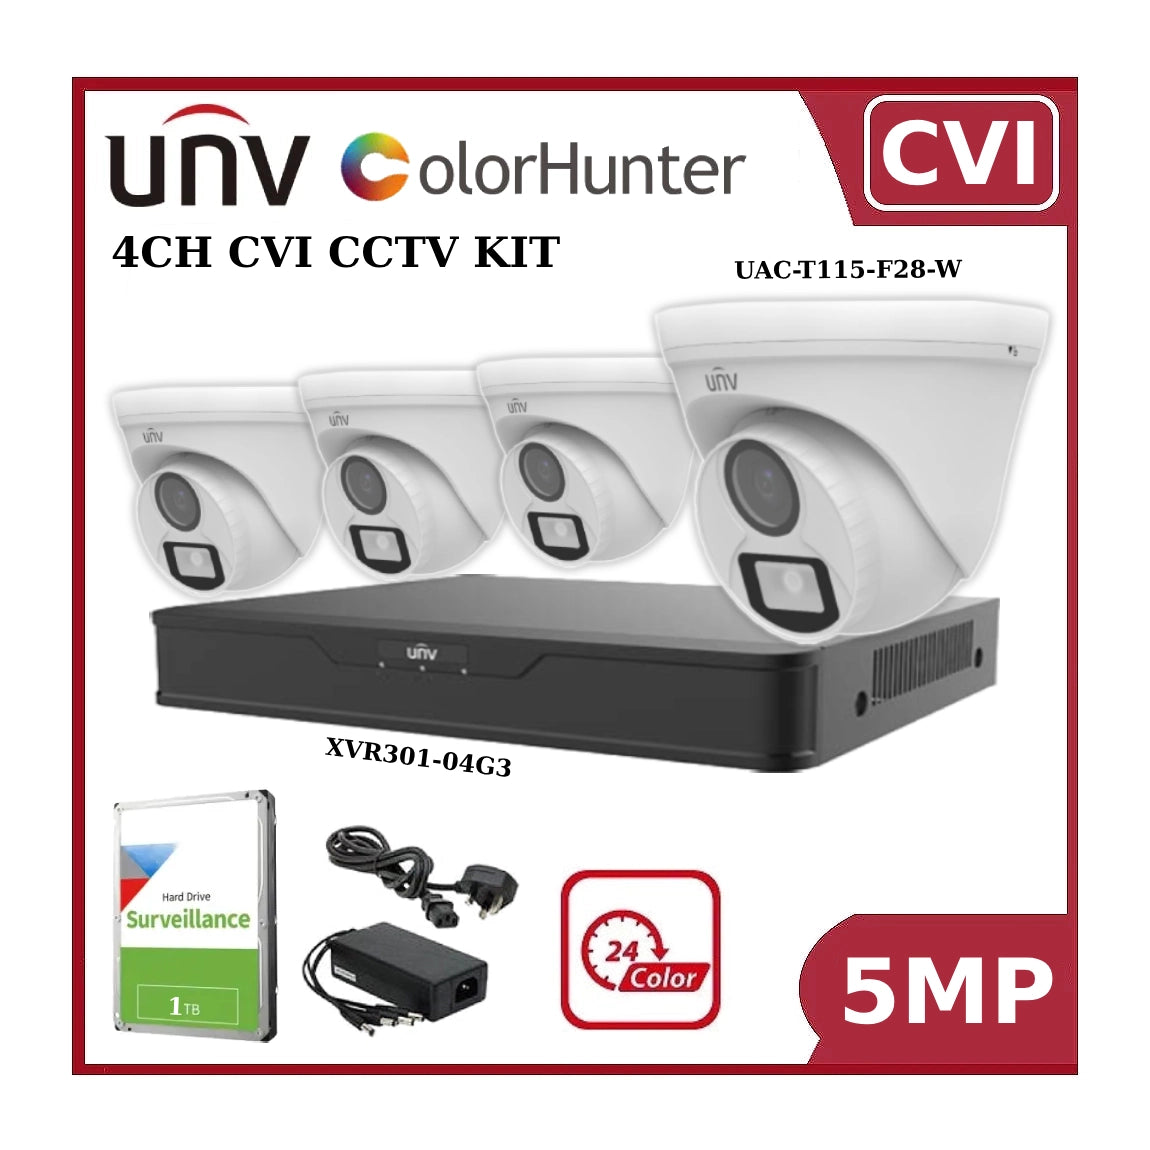 UNV 5MP 24Hr Colour CVI CCTV Kit with 4CH DVR + 4 x UAC-T115-F28-W ColourHunter Turret Cameras + 1TB HDD + PSU